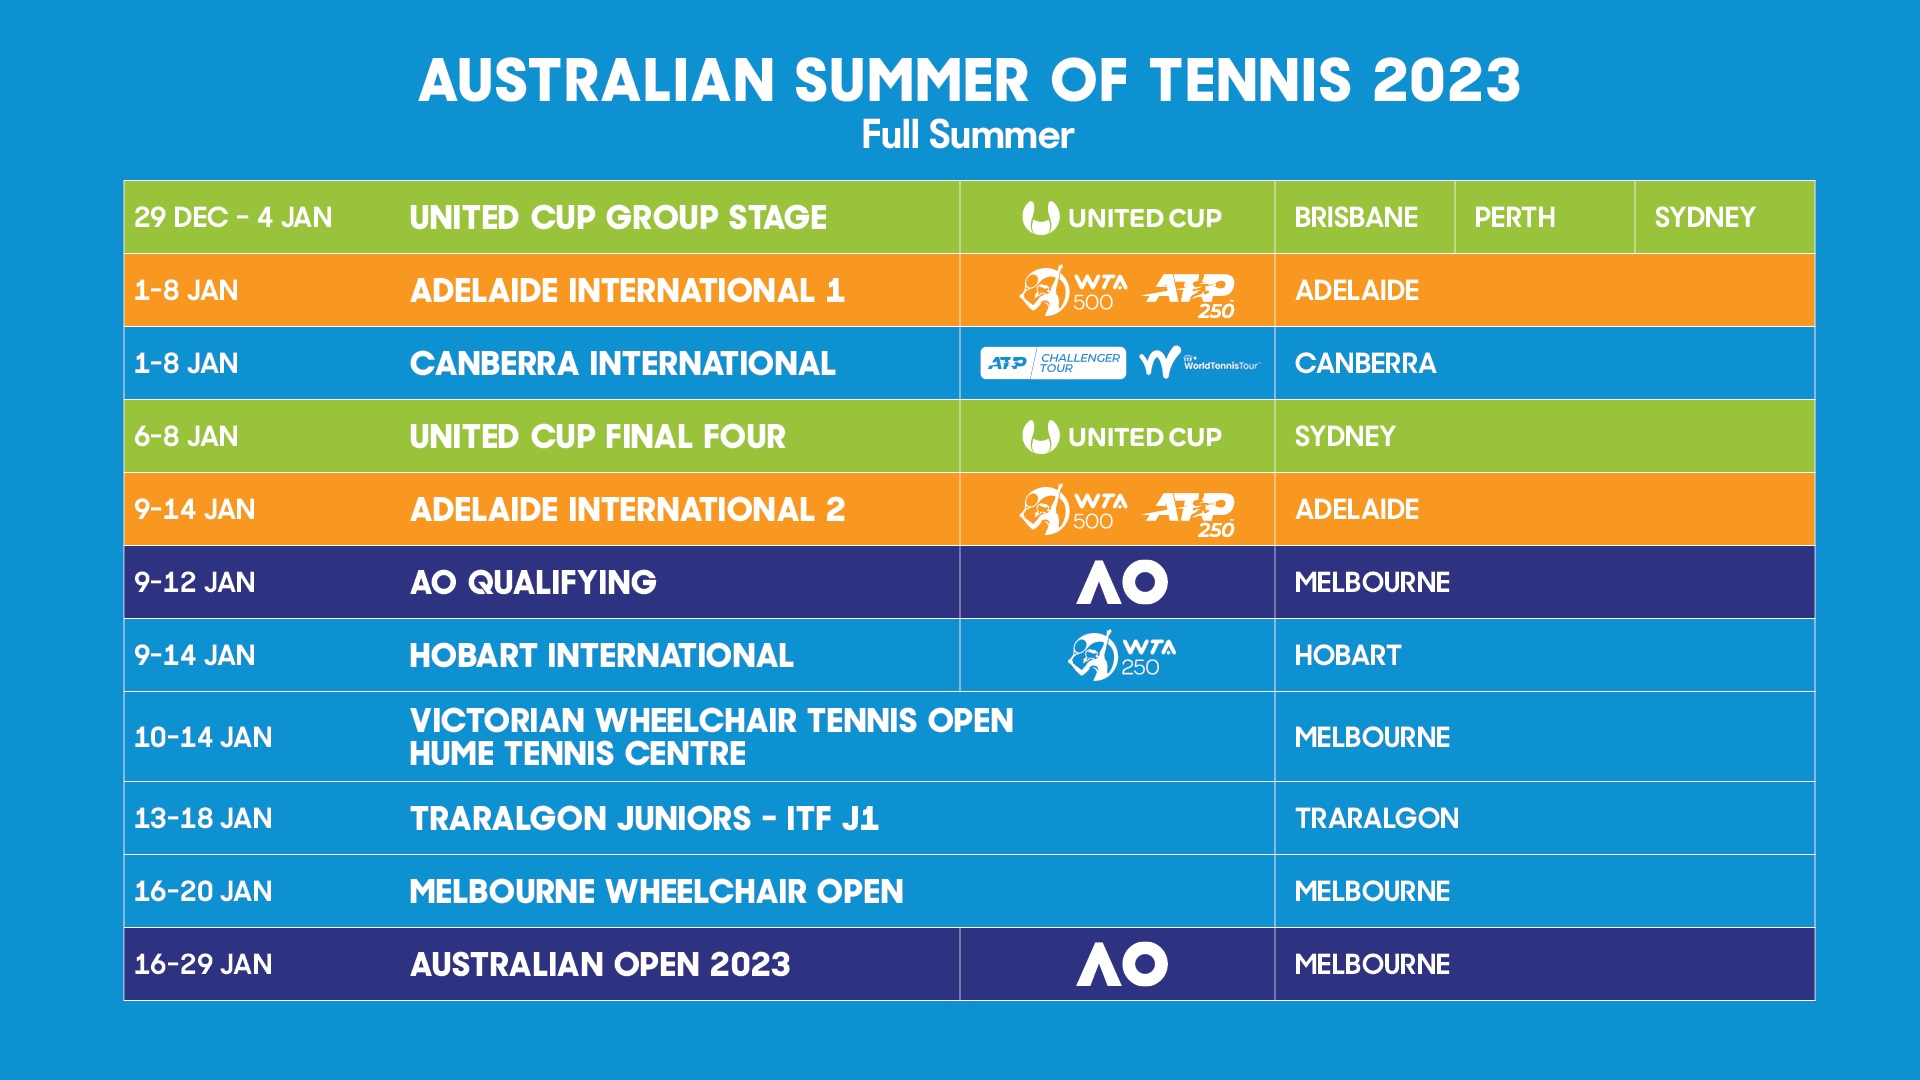 Full 2023 Australian summer of tennis calendar revealed 1 December, 2022 All News News and Features News and Events Tennis Australia